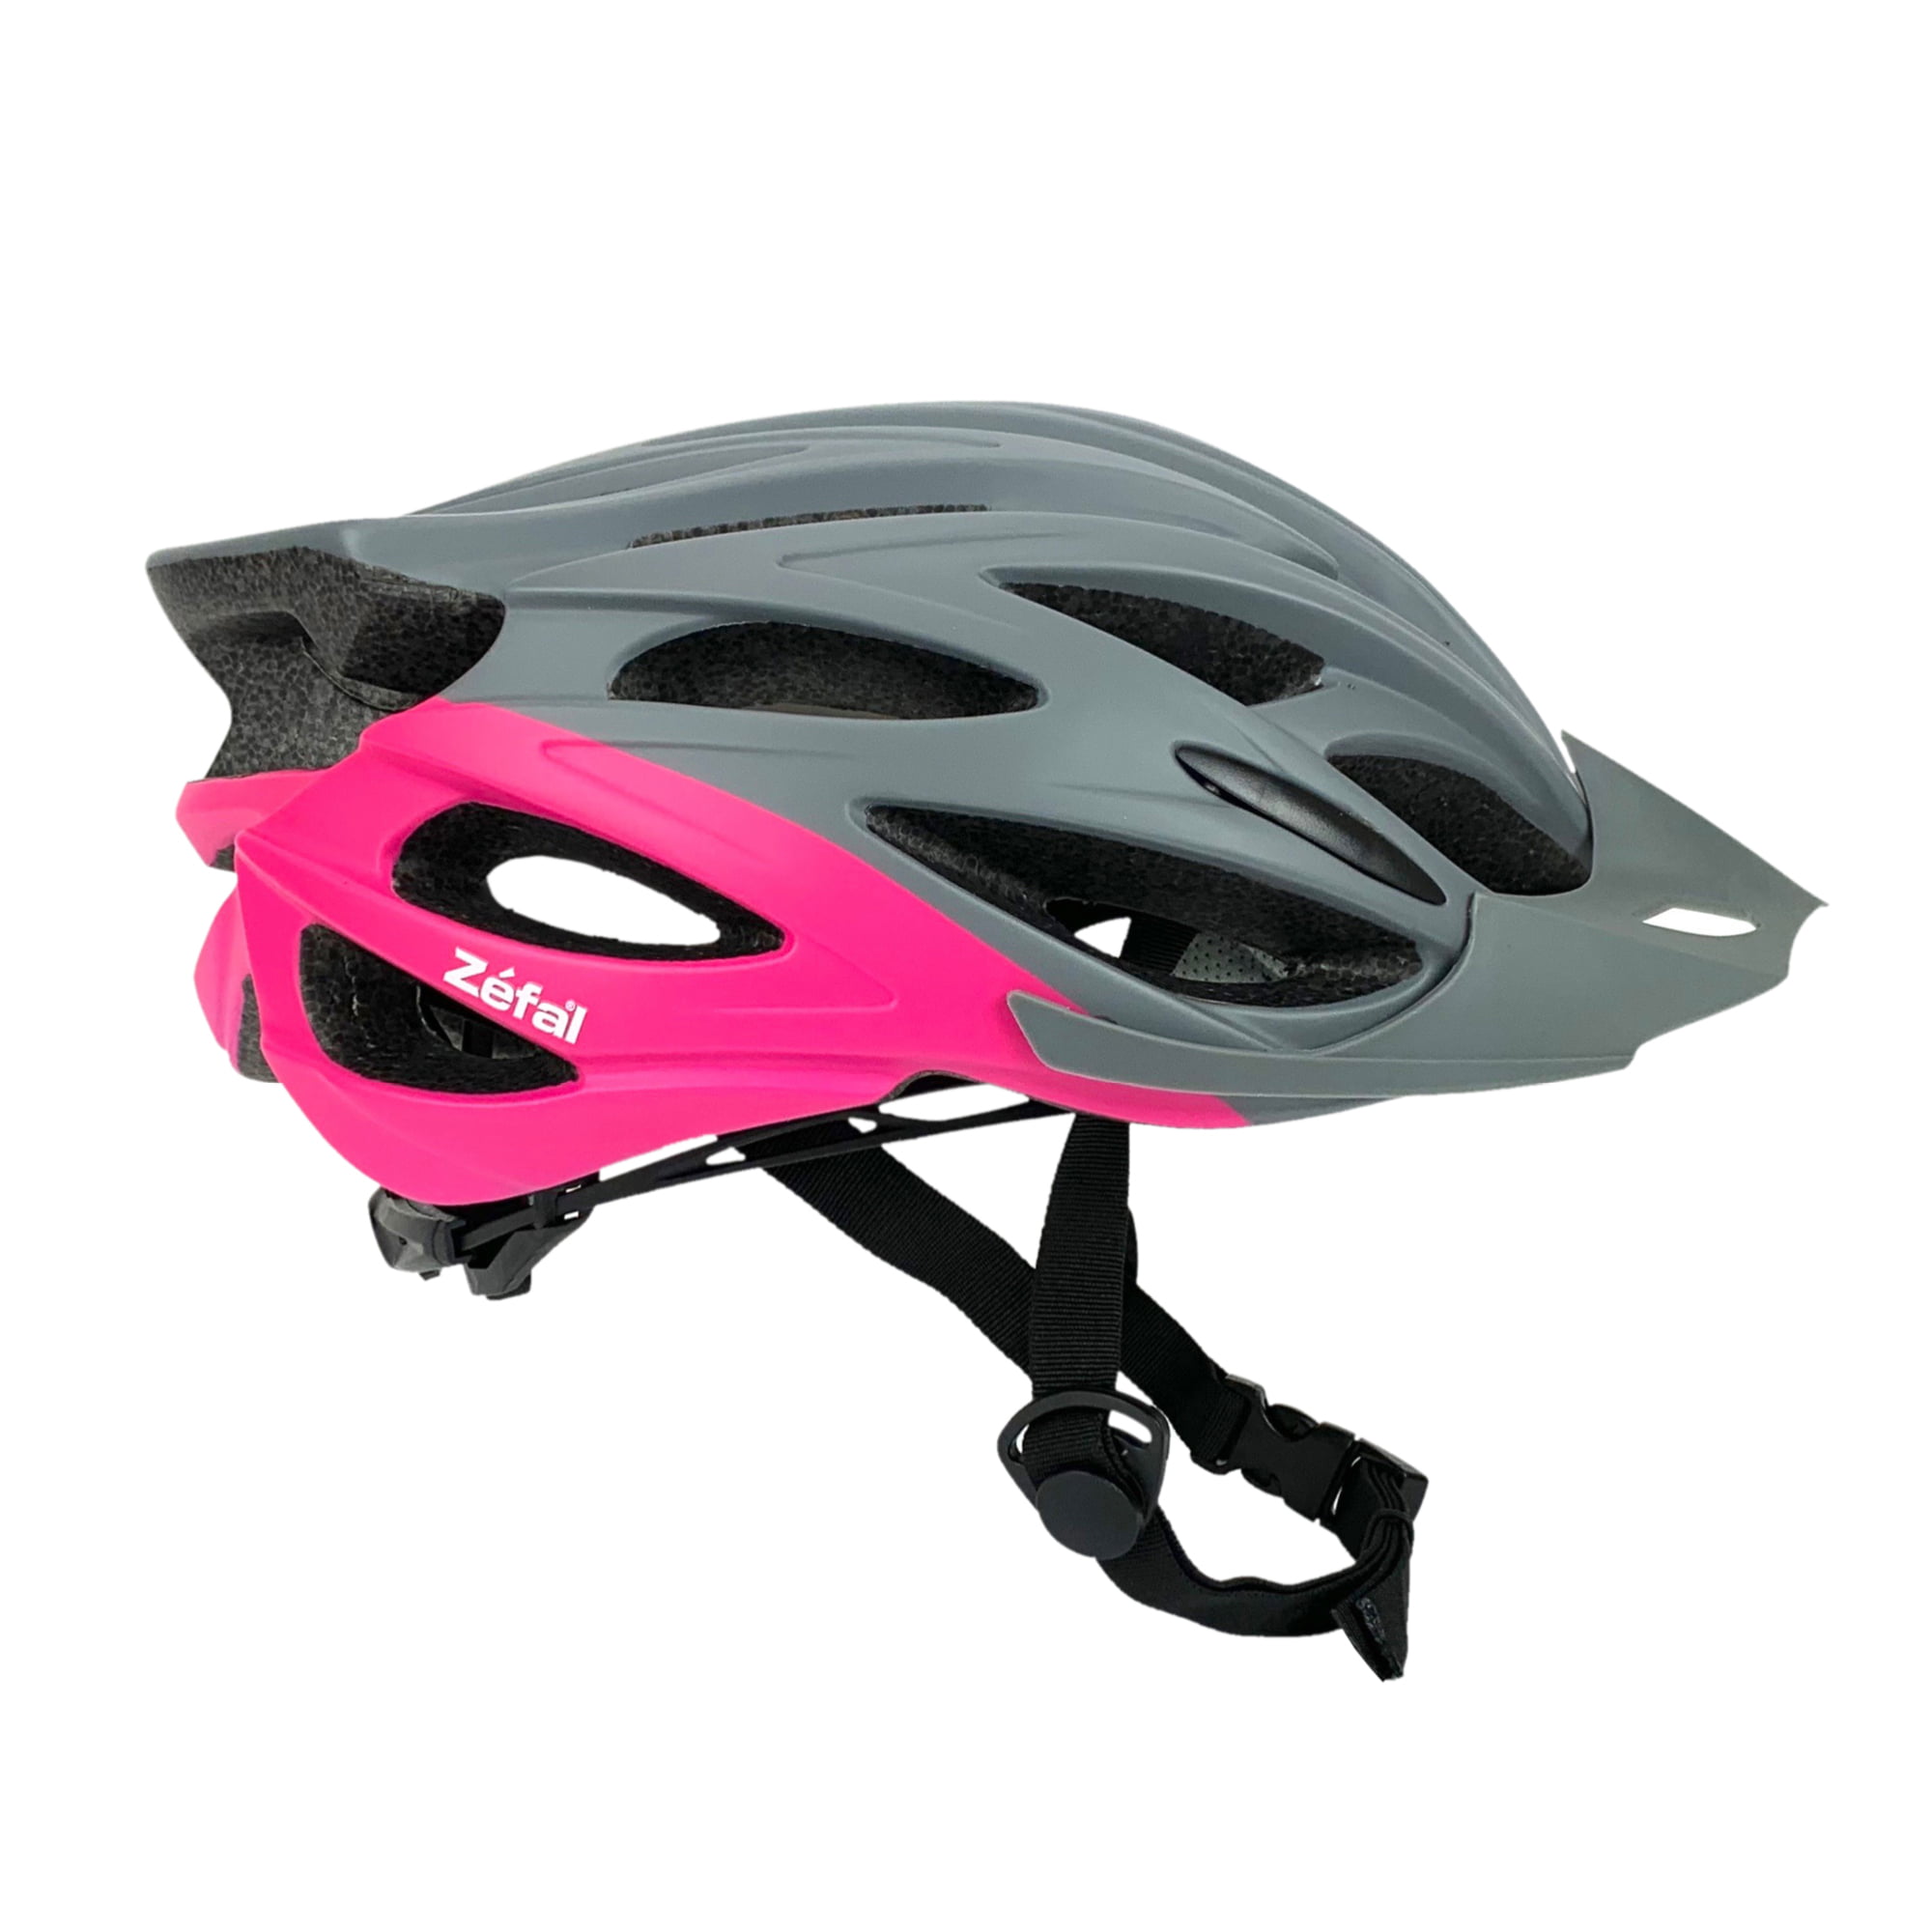 Bicycle Helmet Road Cycling MTB Mountain BIKE Sports Safety Helmet Adjustable US 